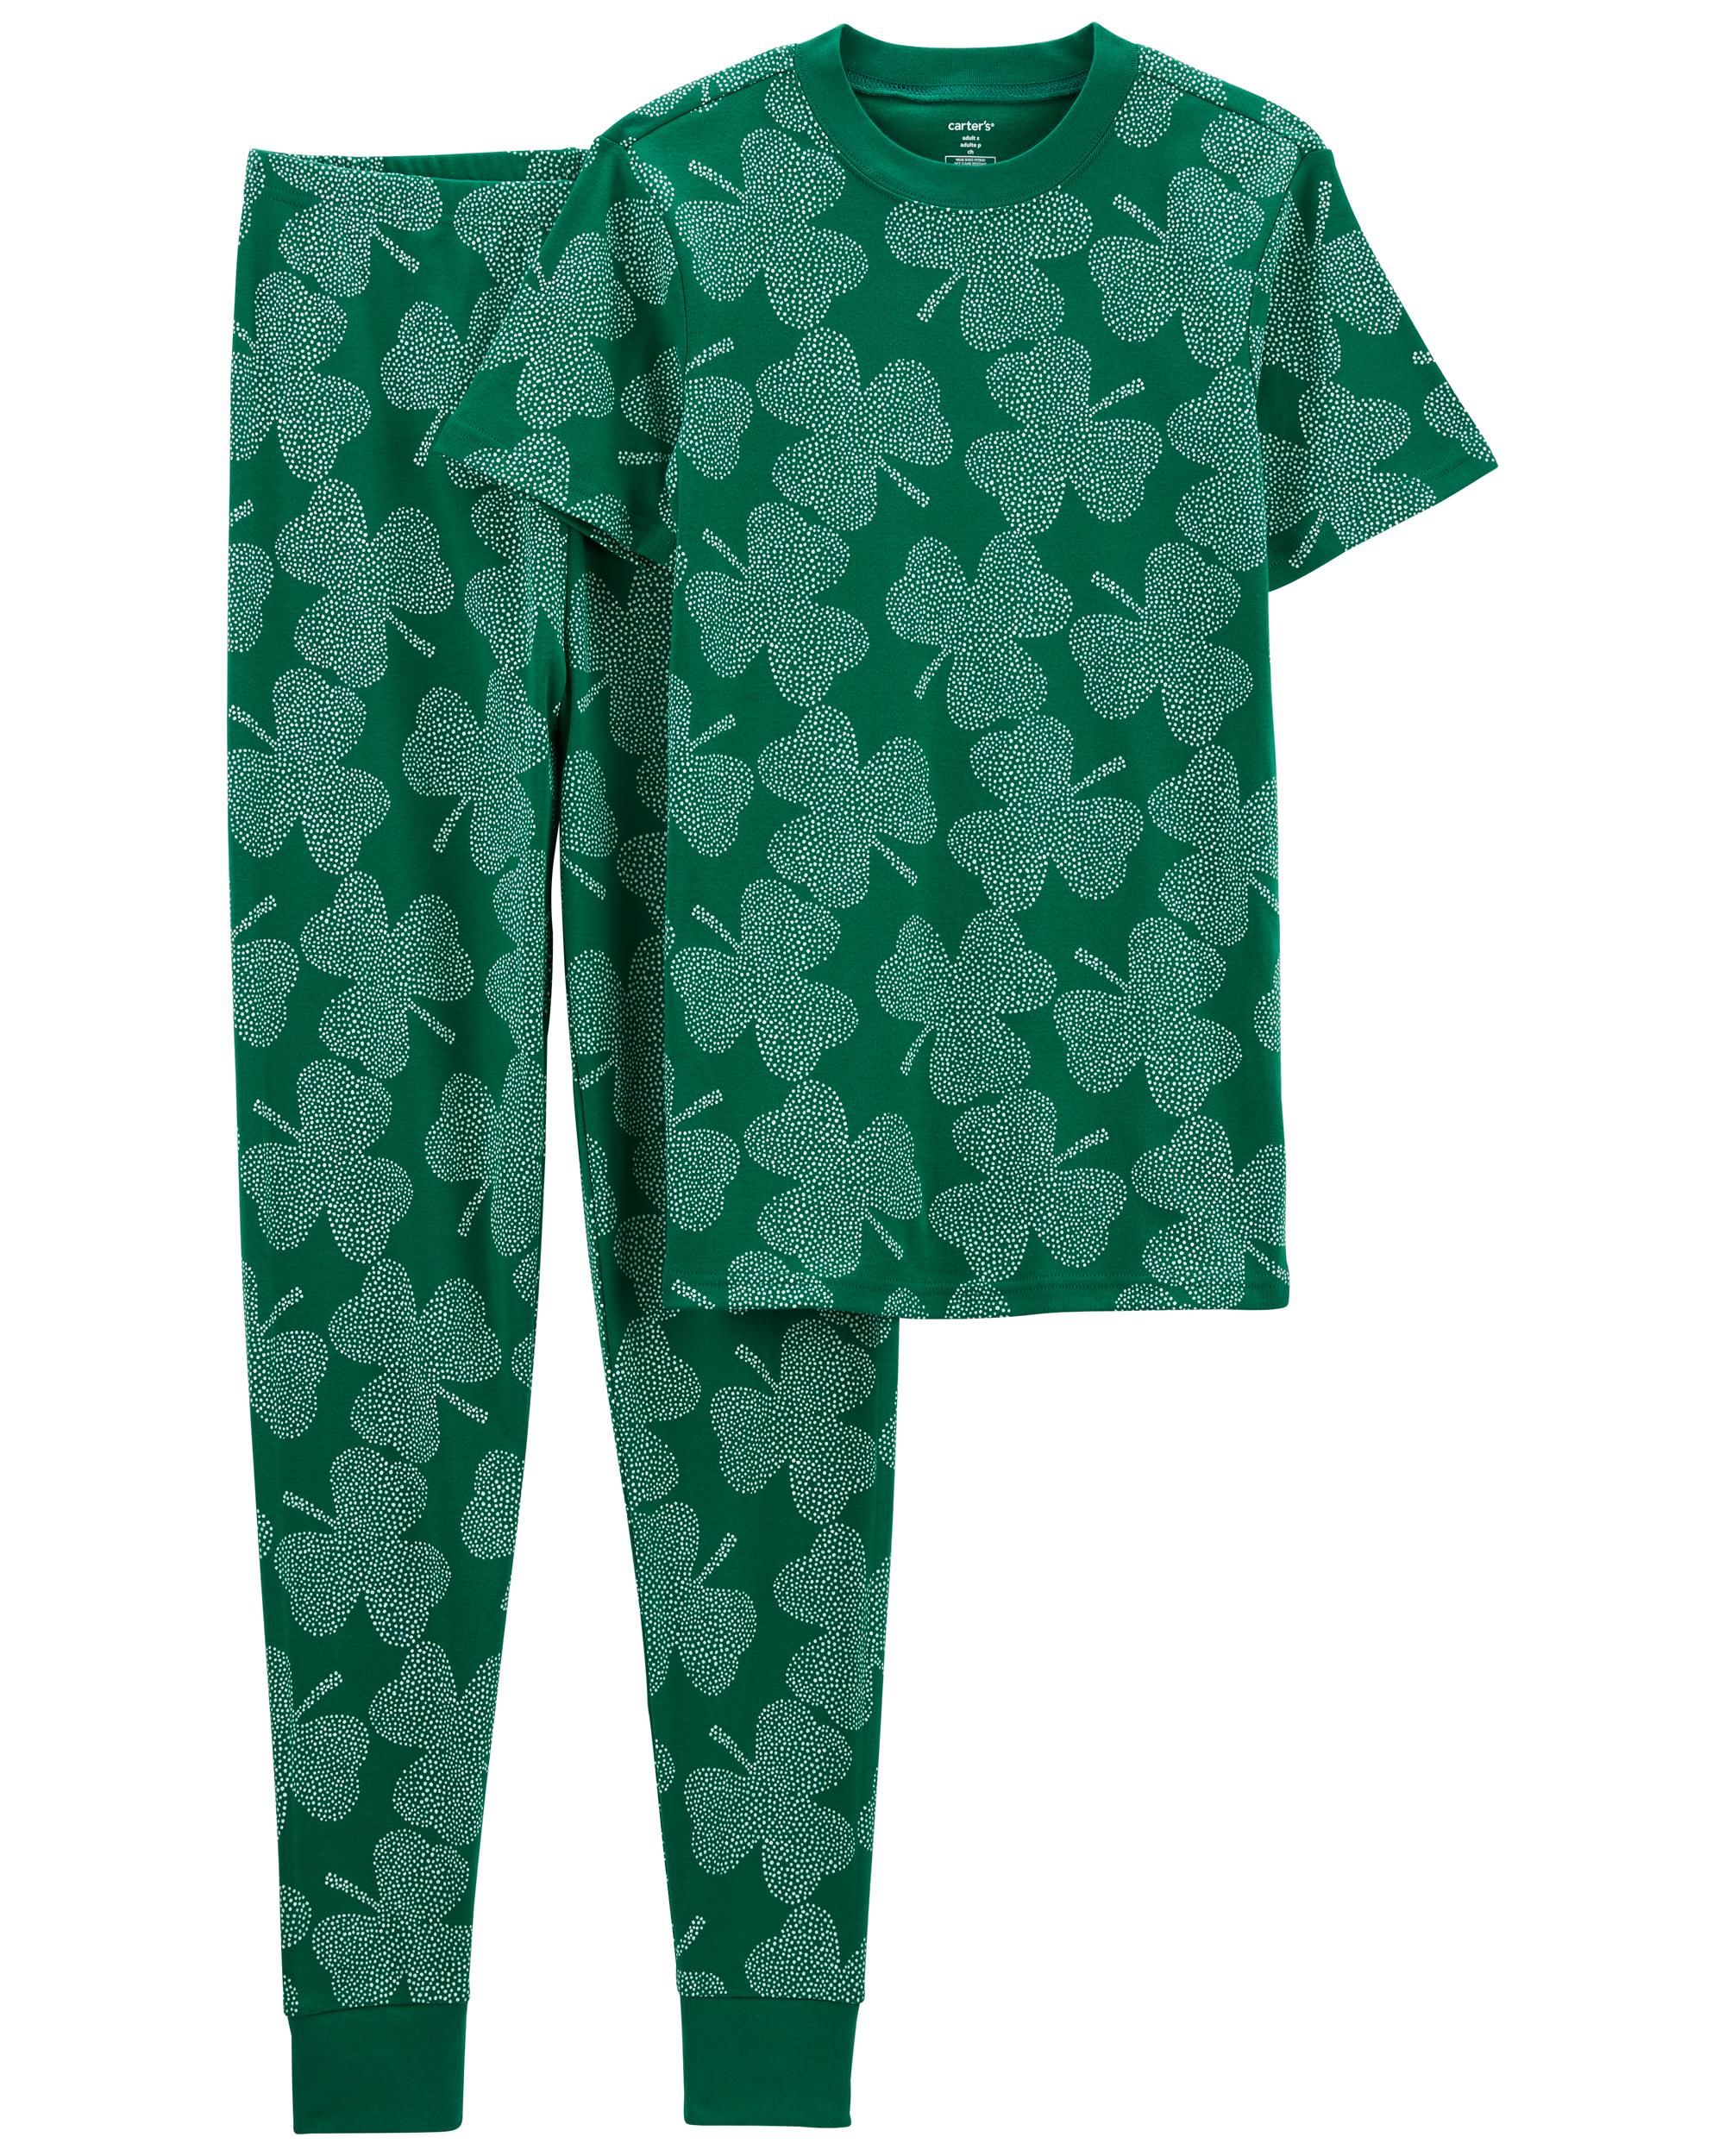 Green Adult 2-Piece Adult St. Patrick's Day 100% Snug Fit Cotton PJs | carters.com | Carter's